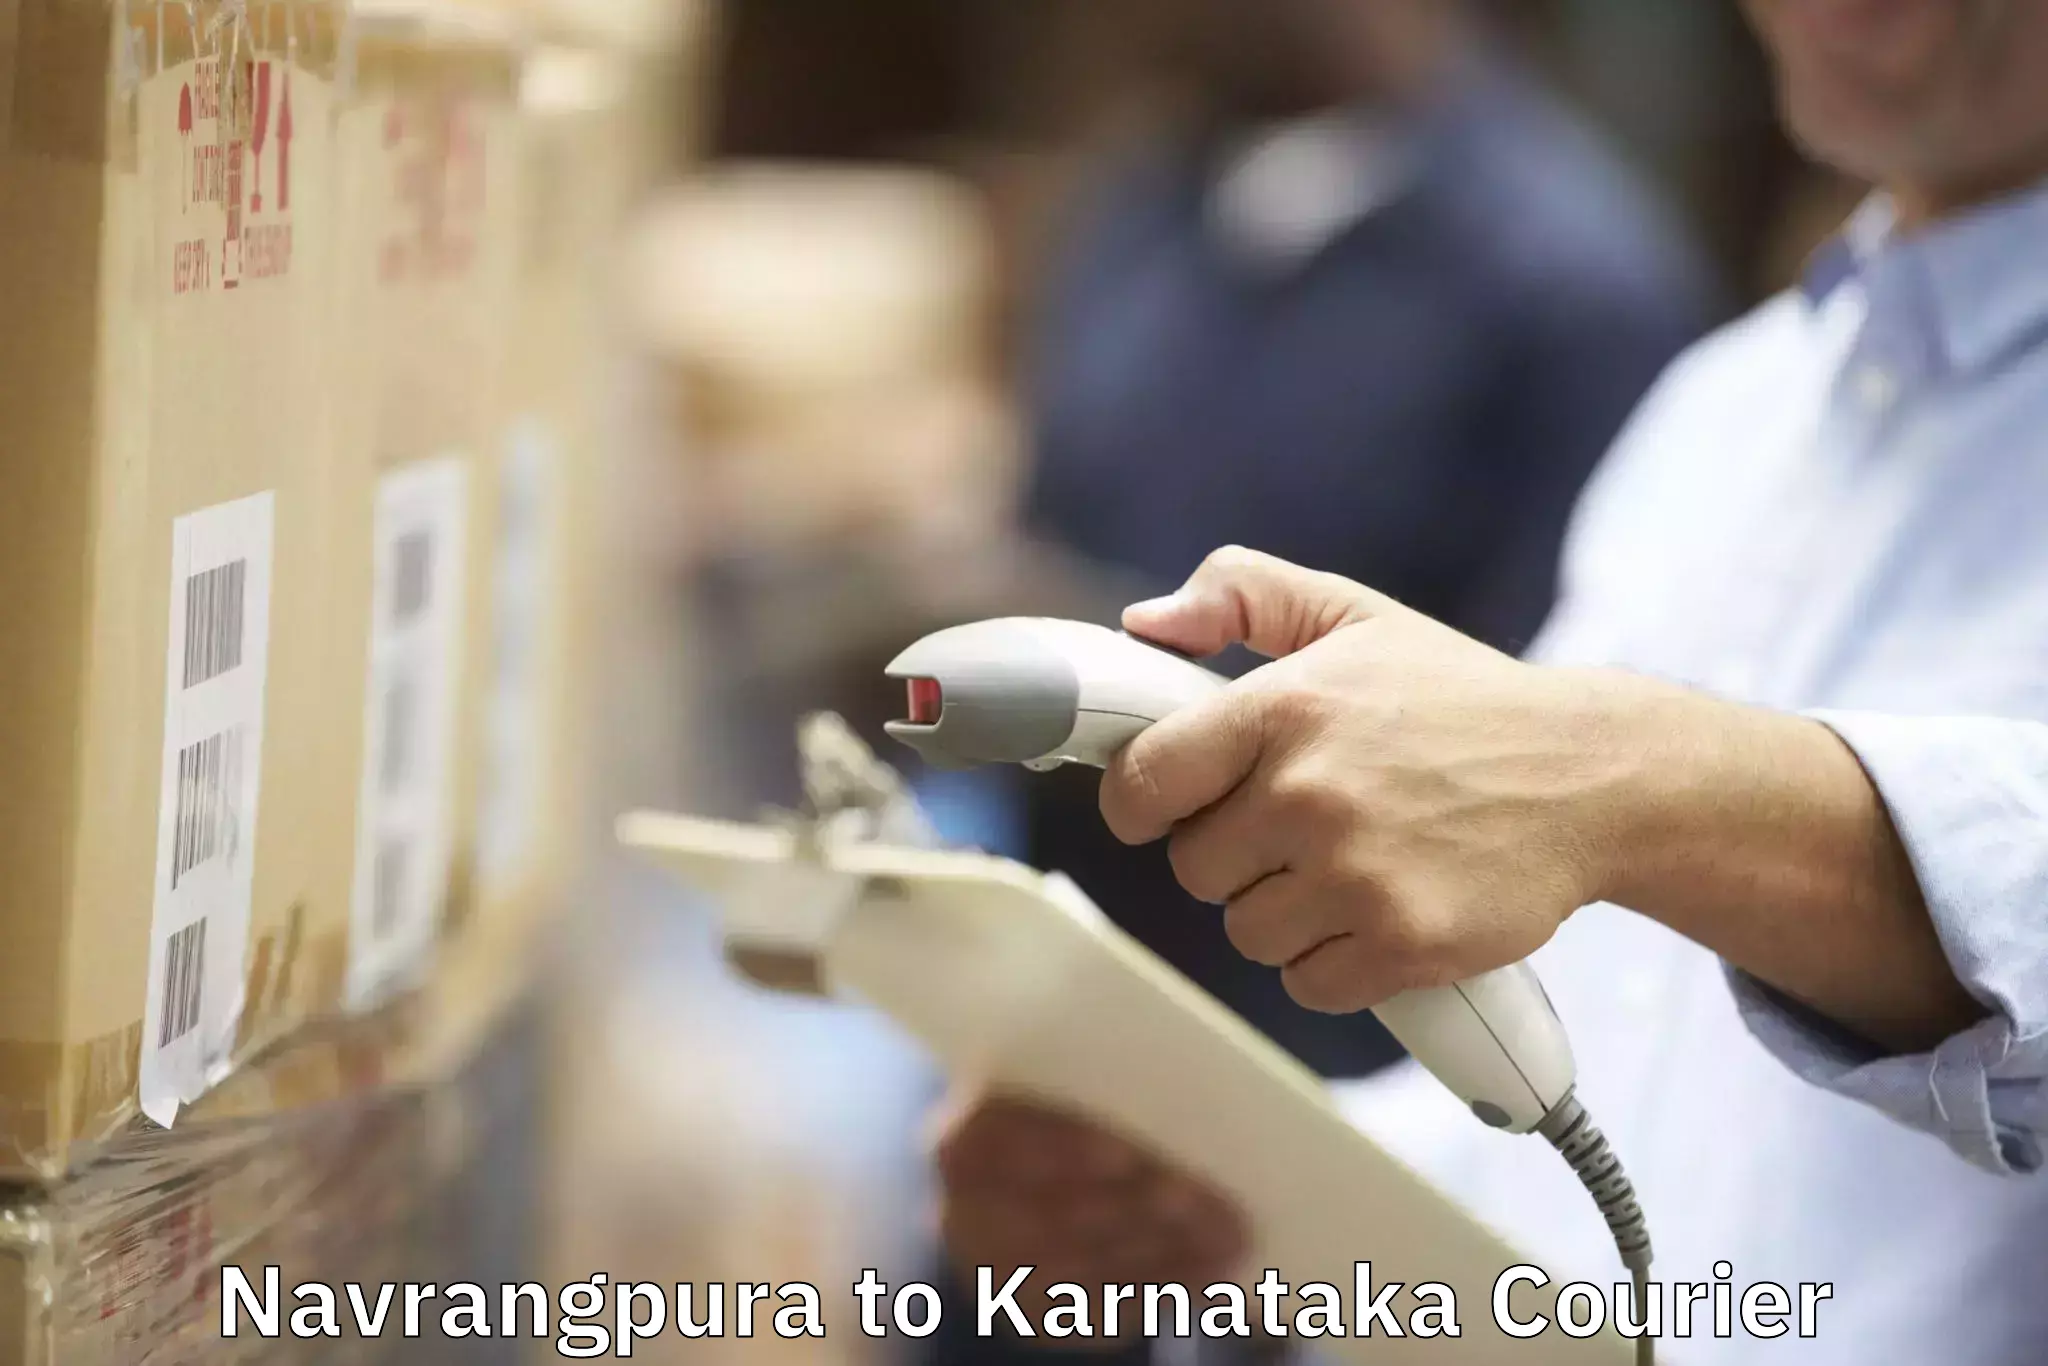 Furniture moving experts Navrangpura to Karnataka